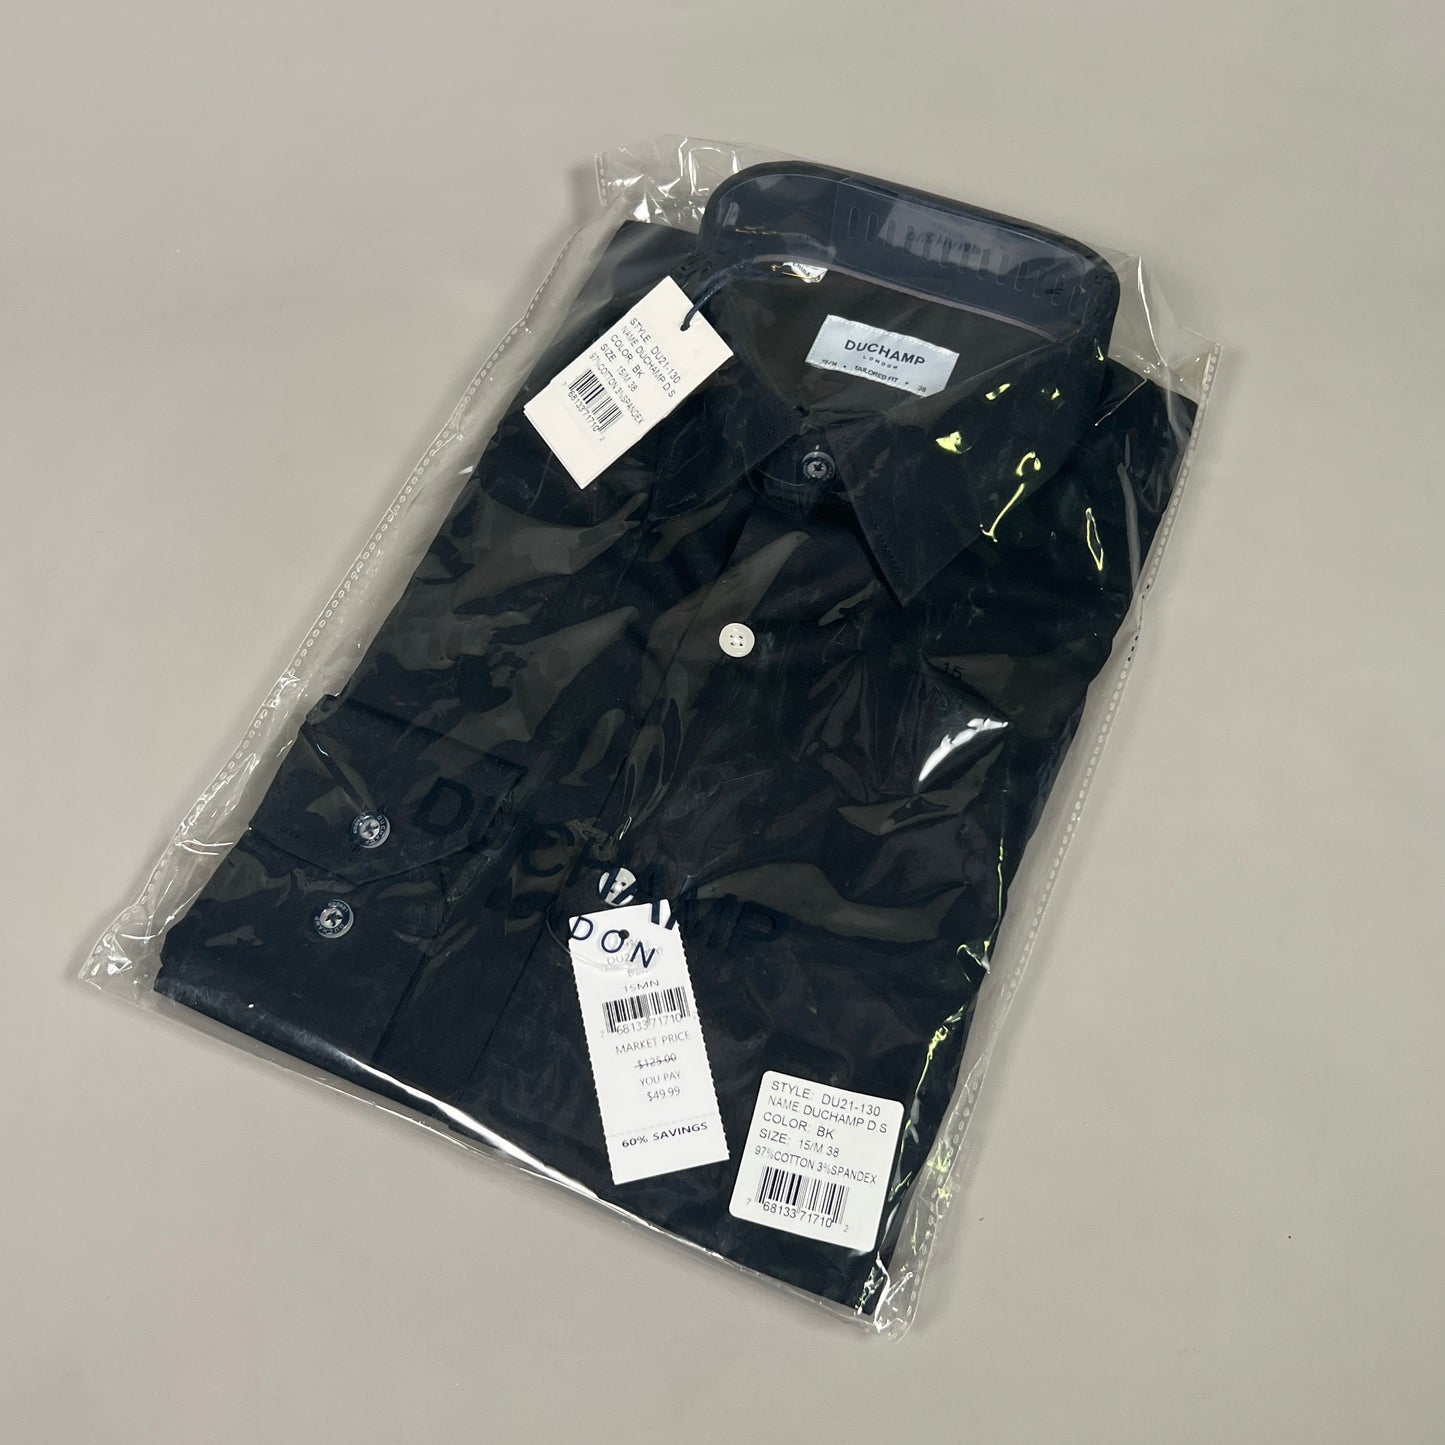 DUCHAMP LONDON Black Solid Tailored-fit Dress Shirt Men's Sz M / 38 / 15 (New)